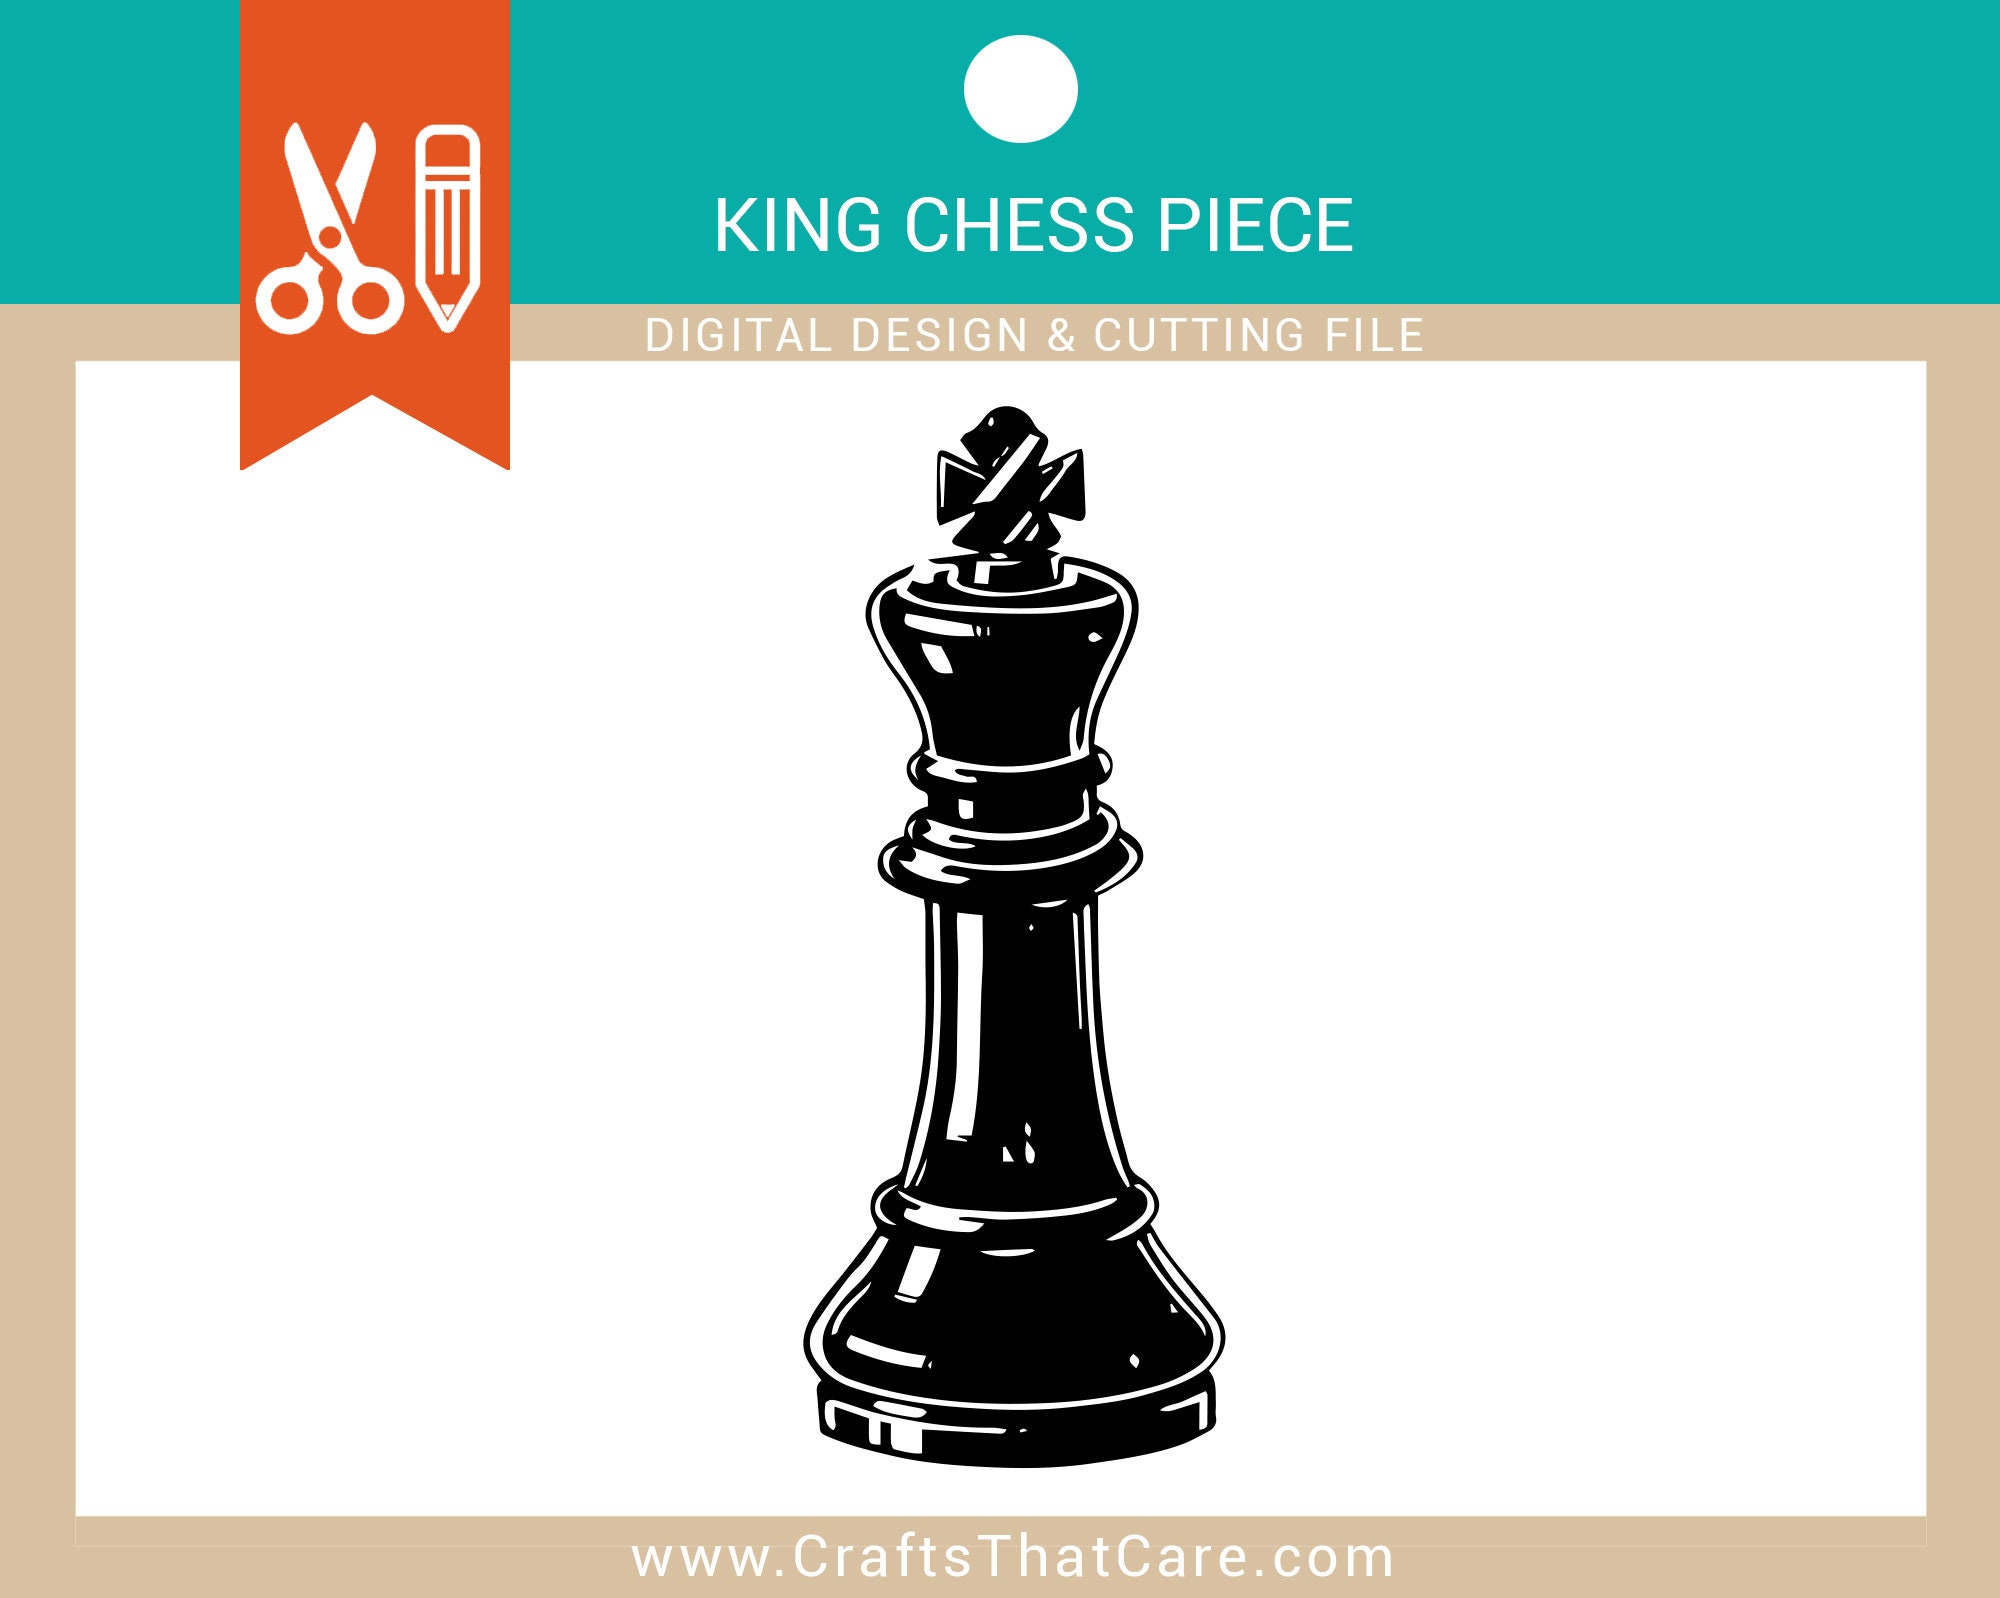 File:Chess boxing pictogram.svg - Wikipedia